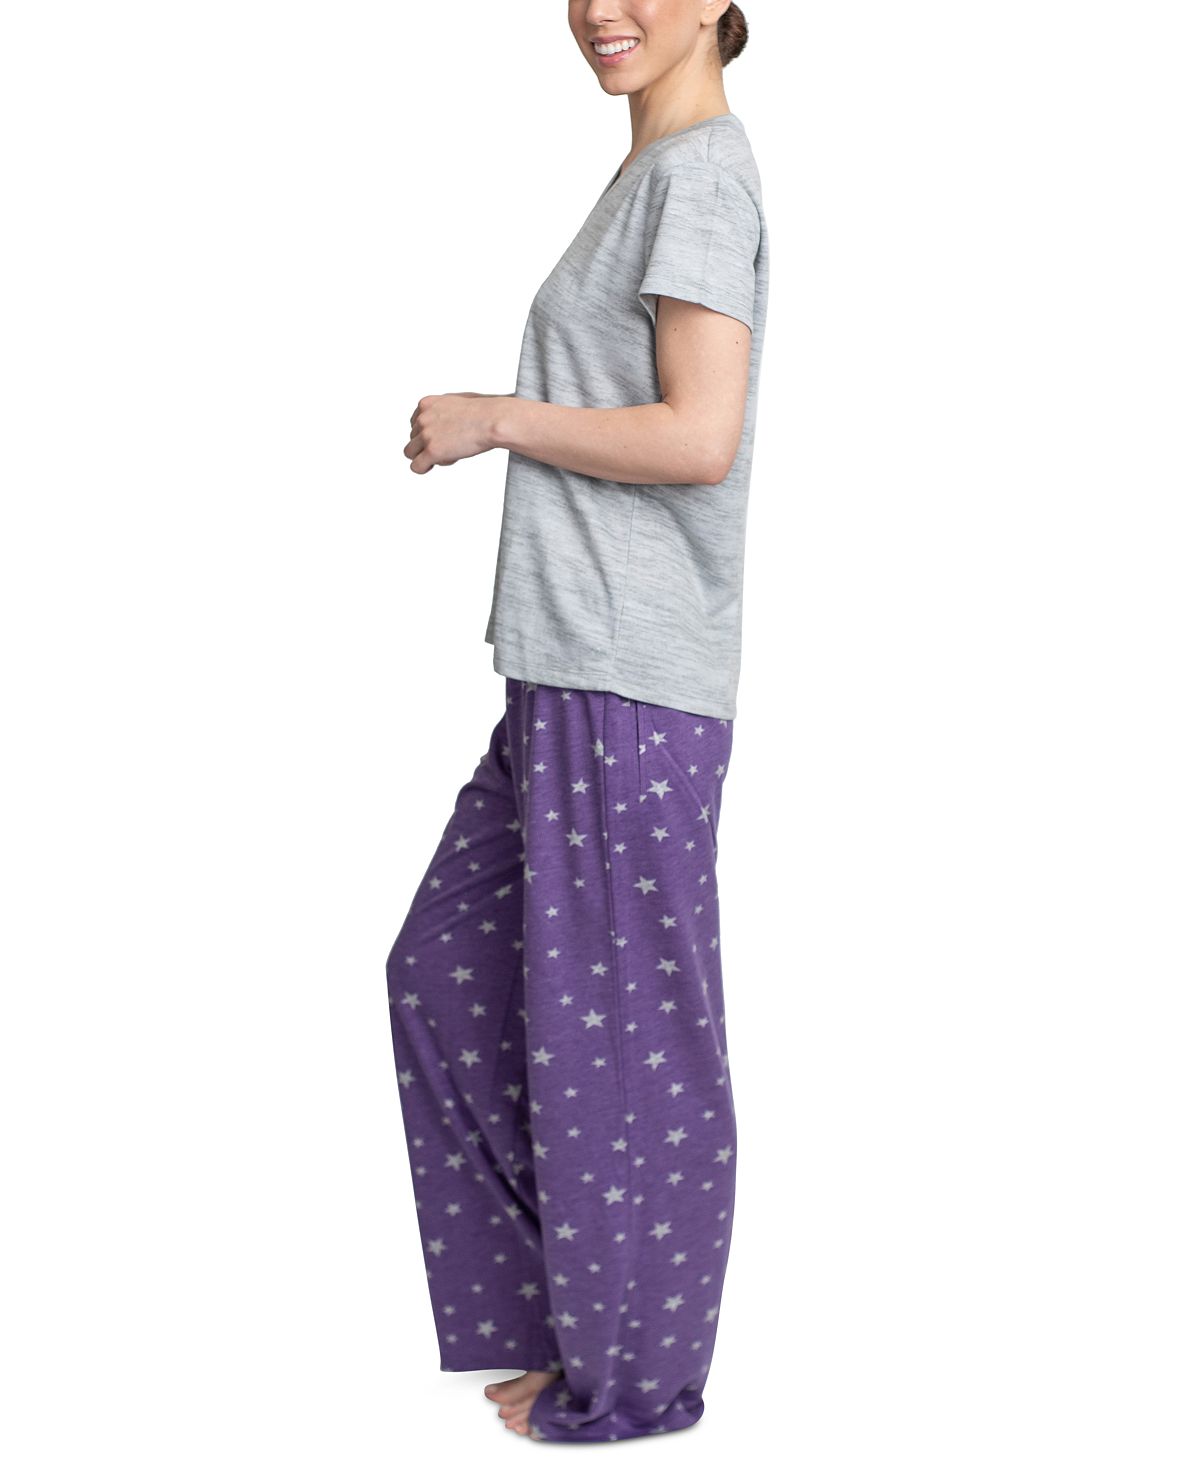 Muk Luks Knit Pajama Set Gry/star